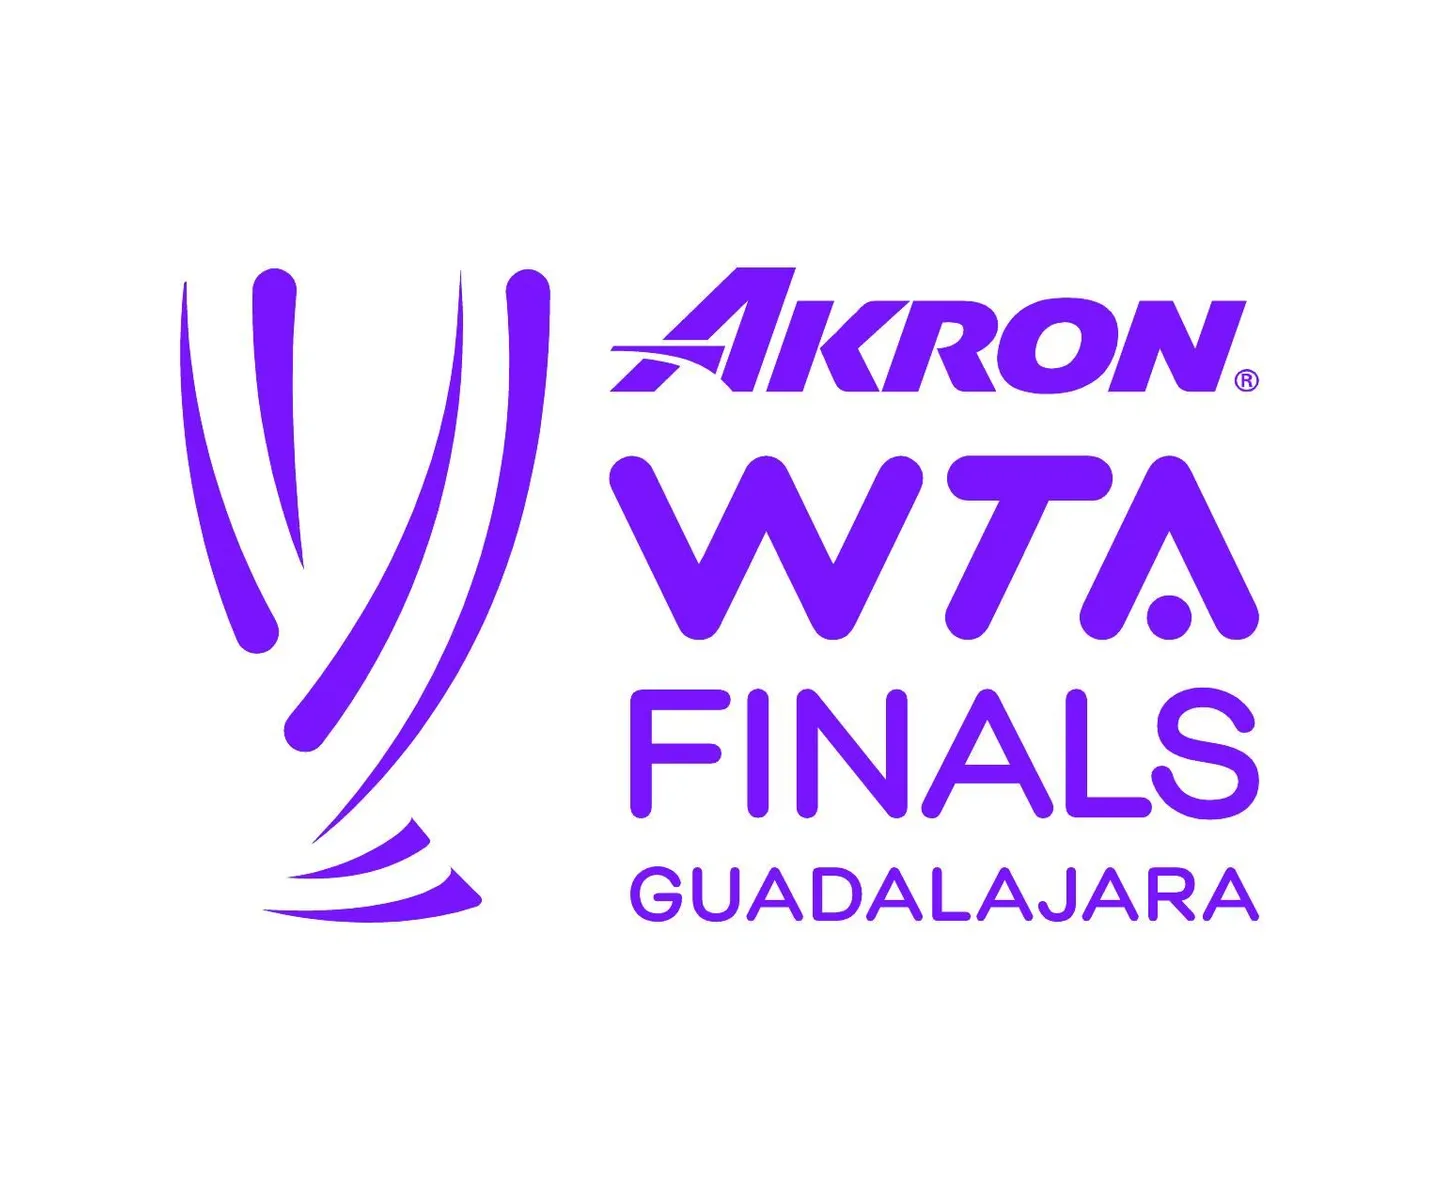 Caratula de WTA 1000 FINALS GUADALAJARA (TENIS WTA 1000 GUADALAJARA) 